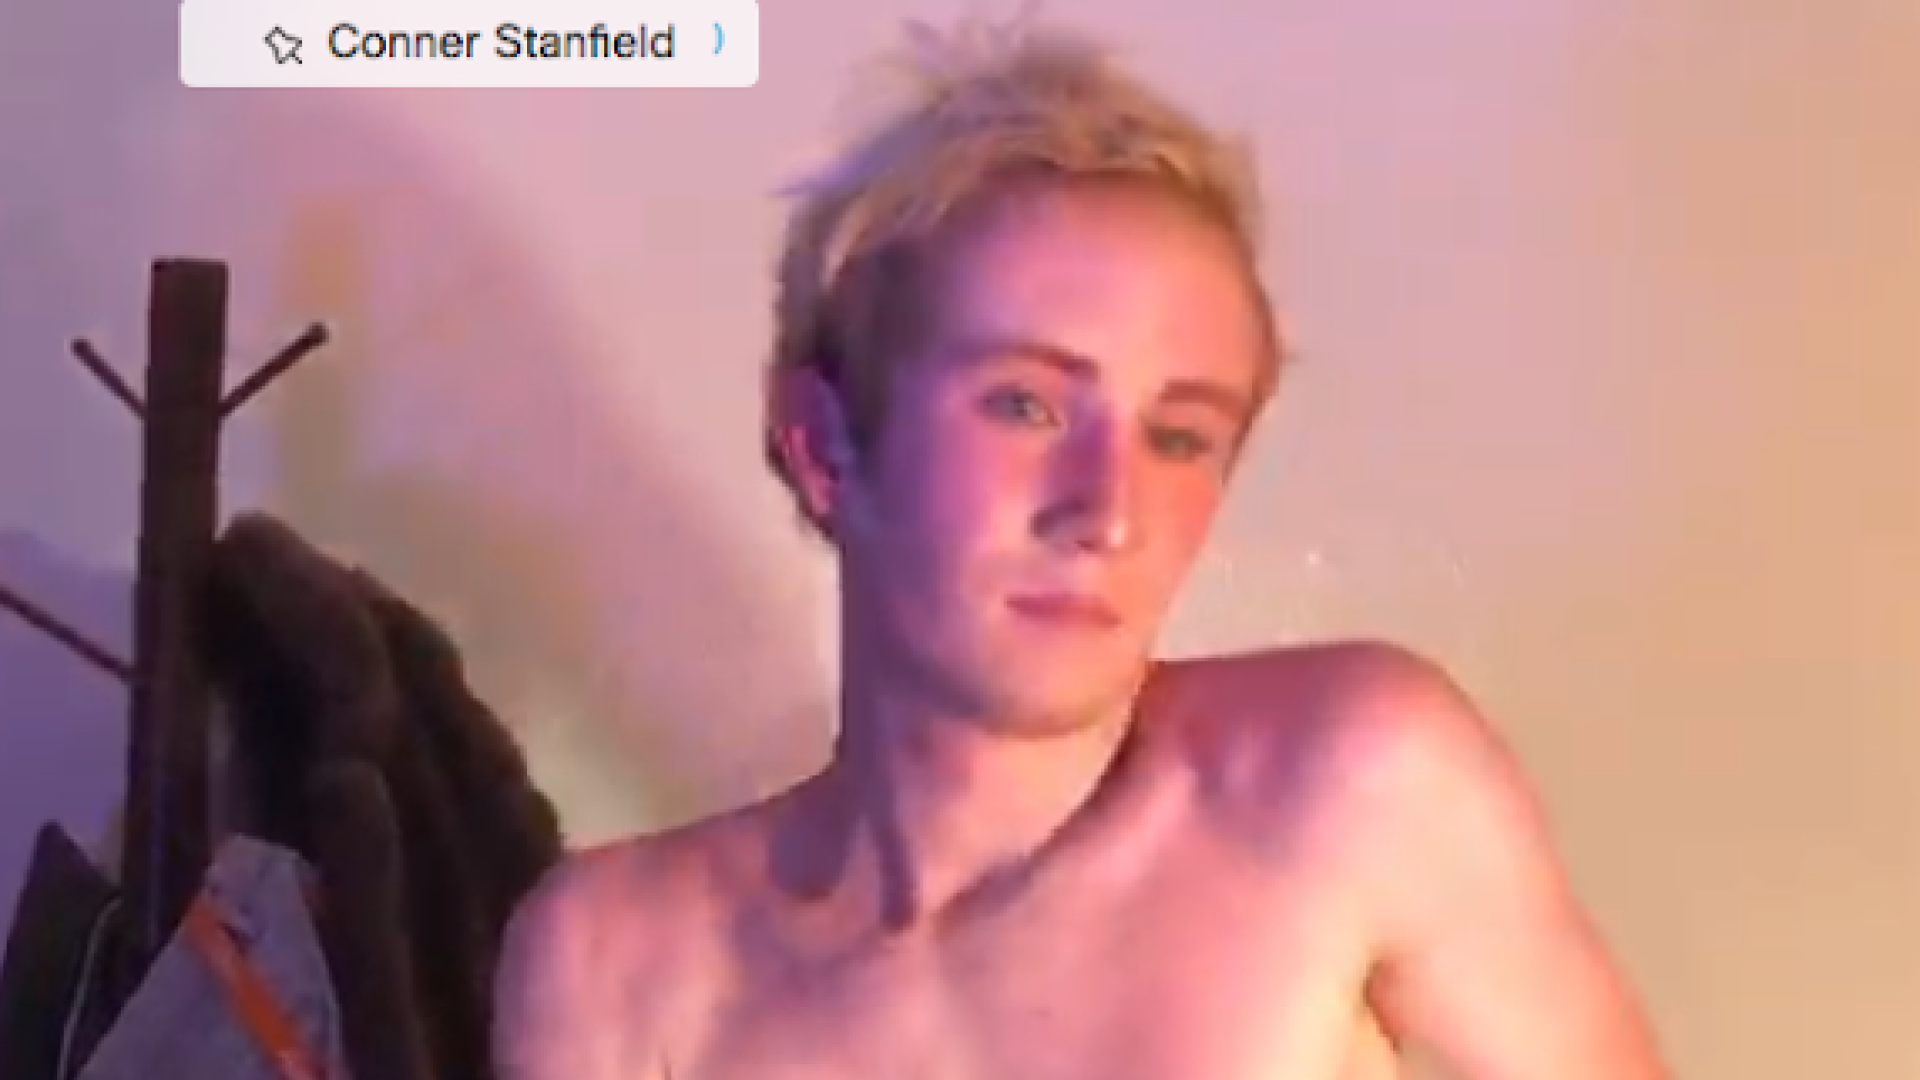 Conner shirtless performance 